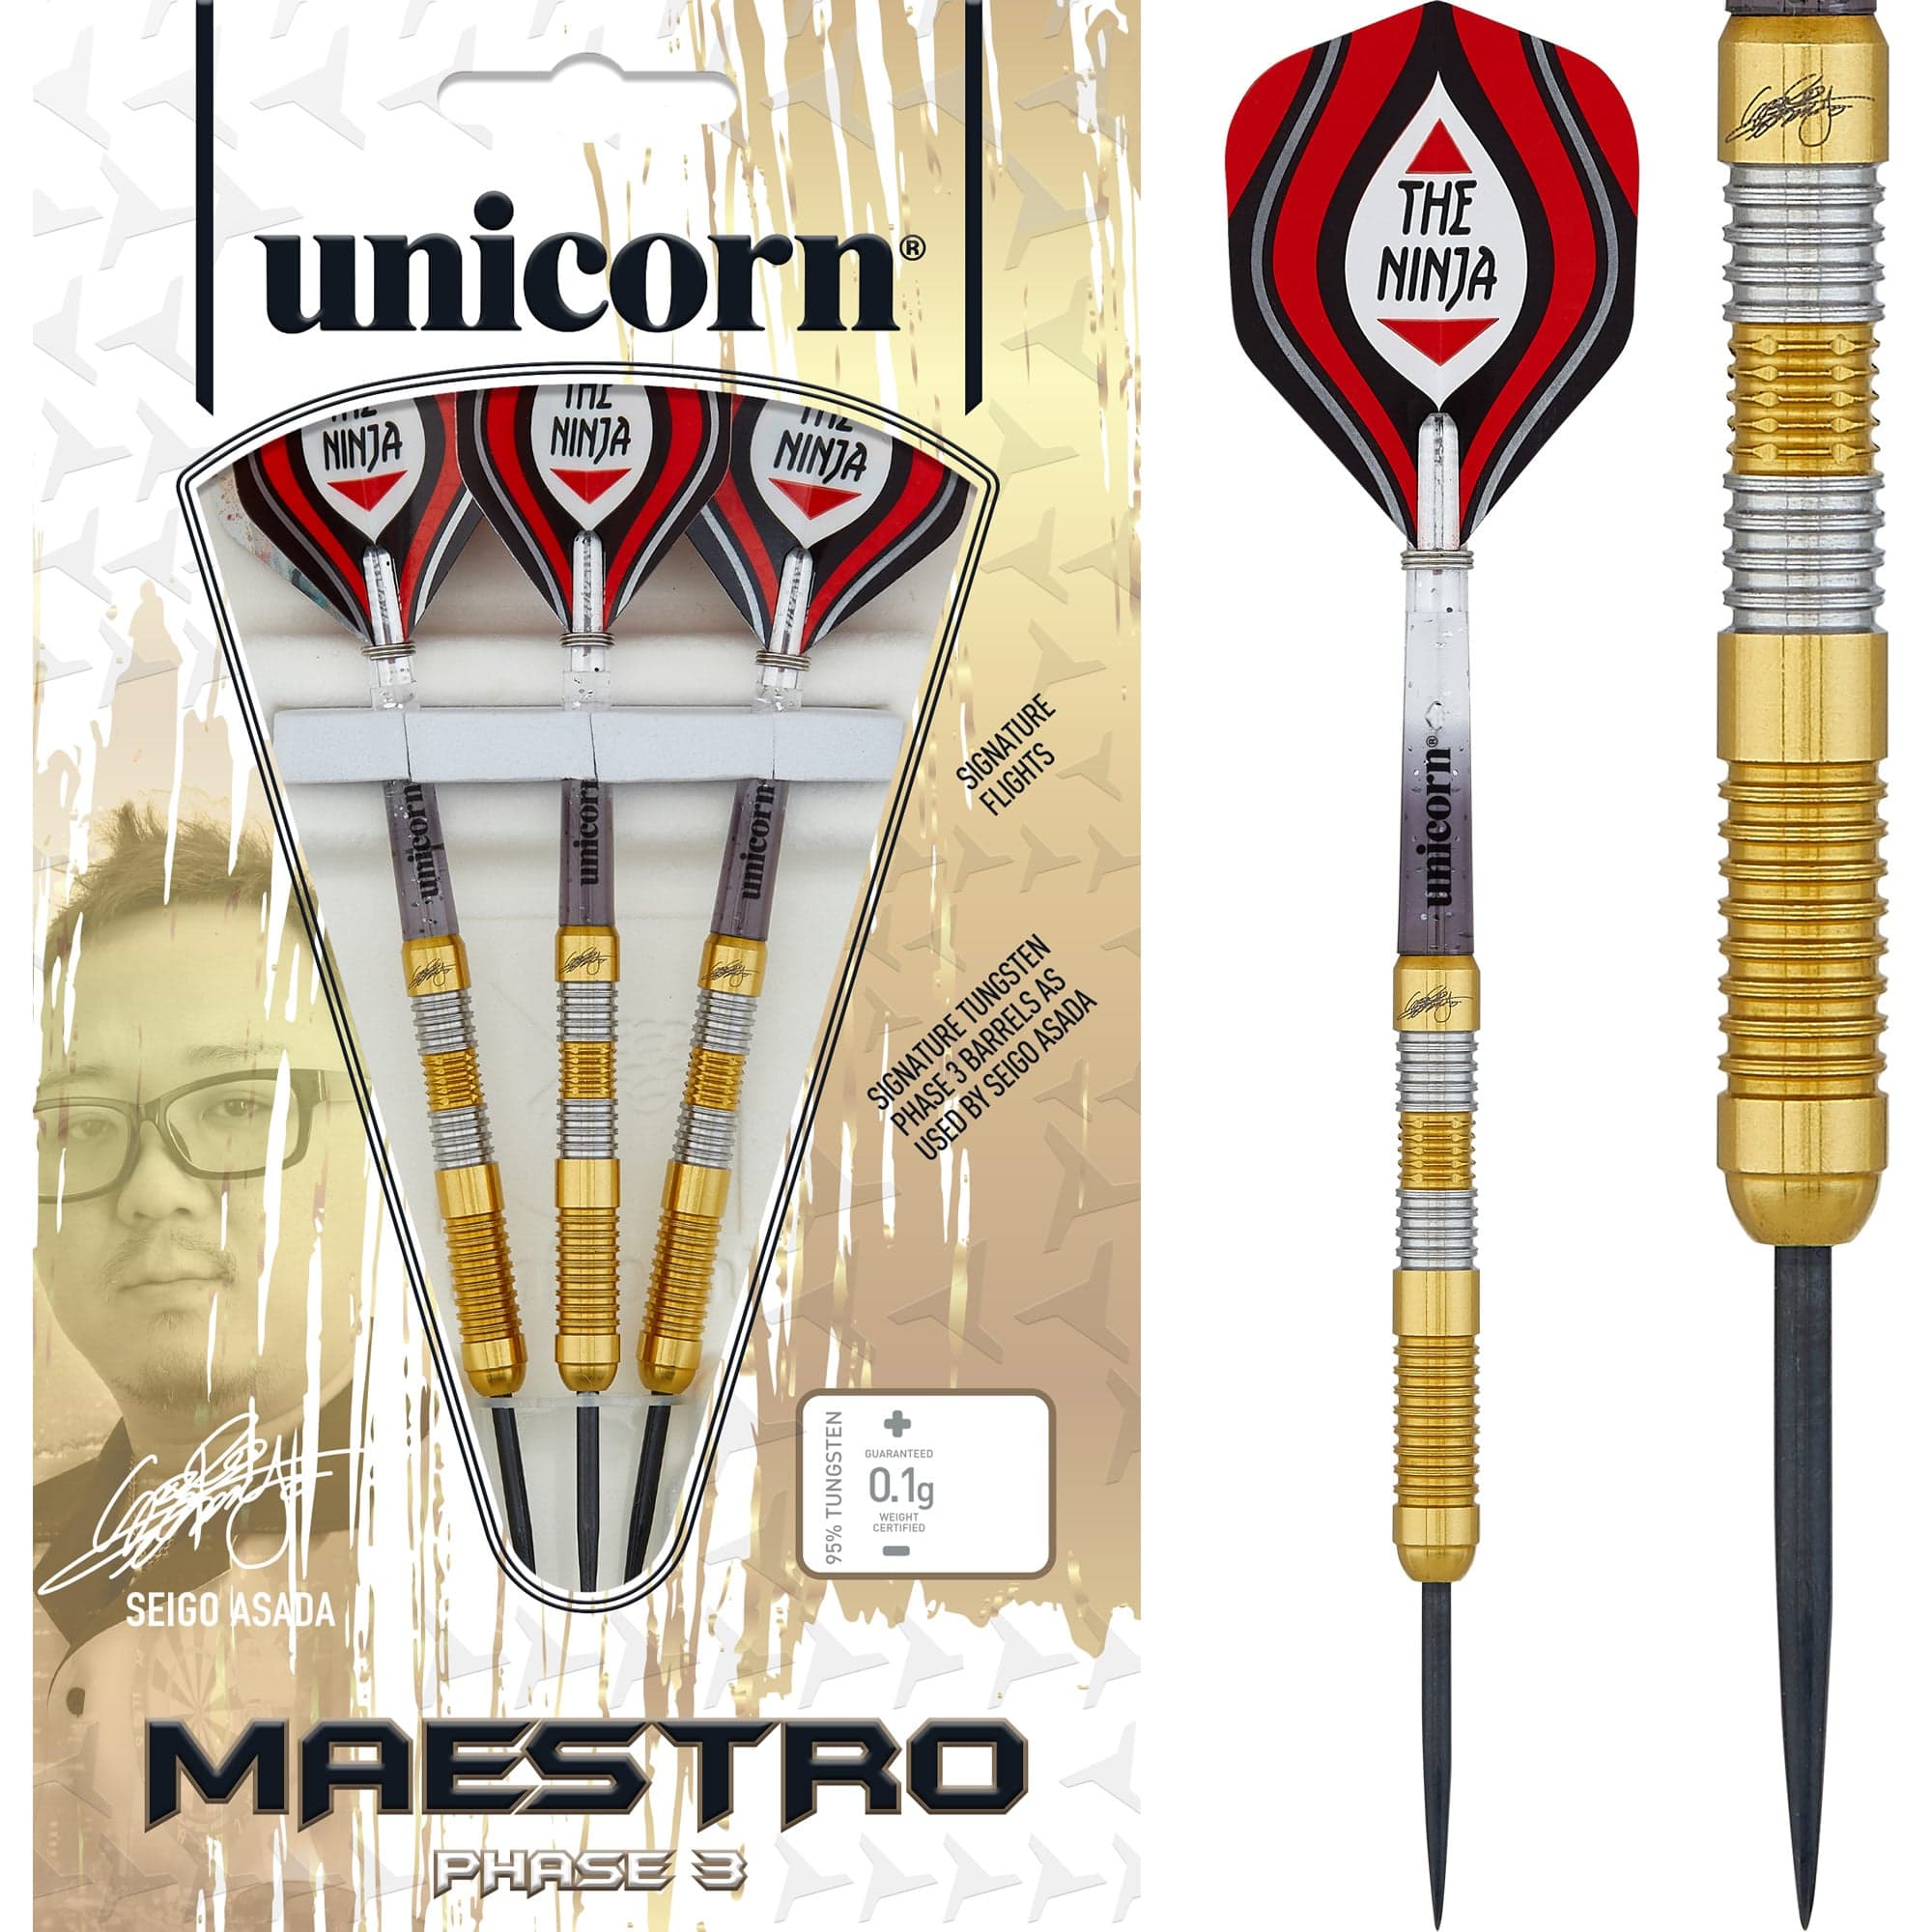 Unicorn Seigo Asada Darts - Steel Tip - Maestro - Phase 3 - Gold